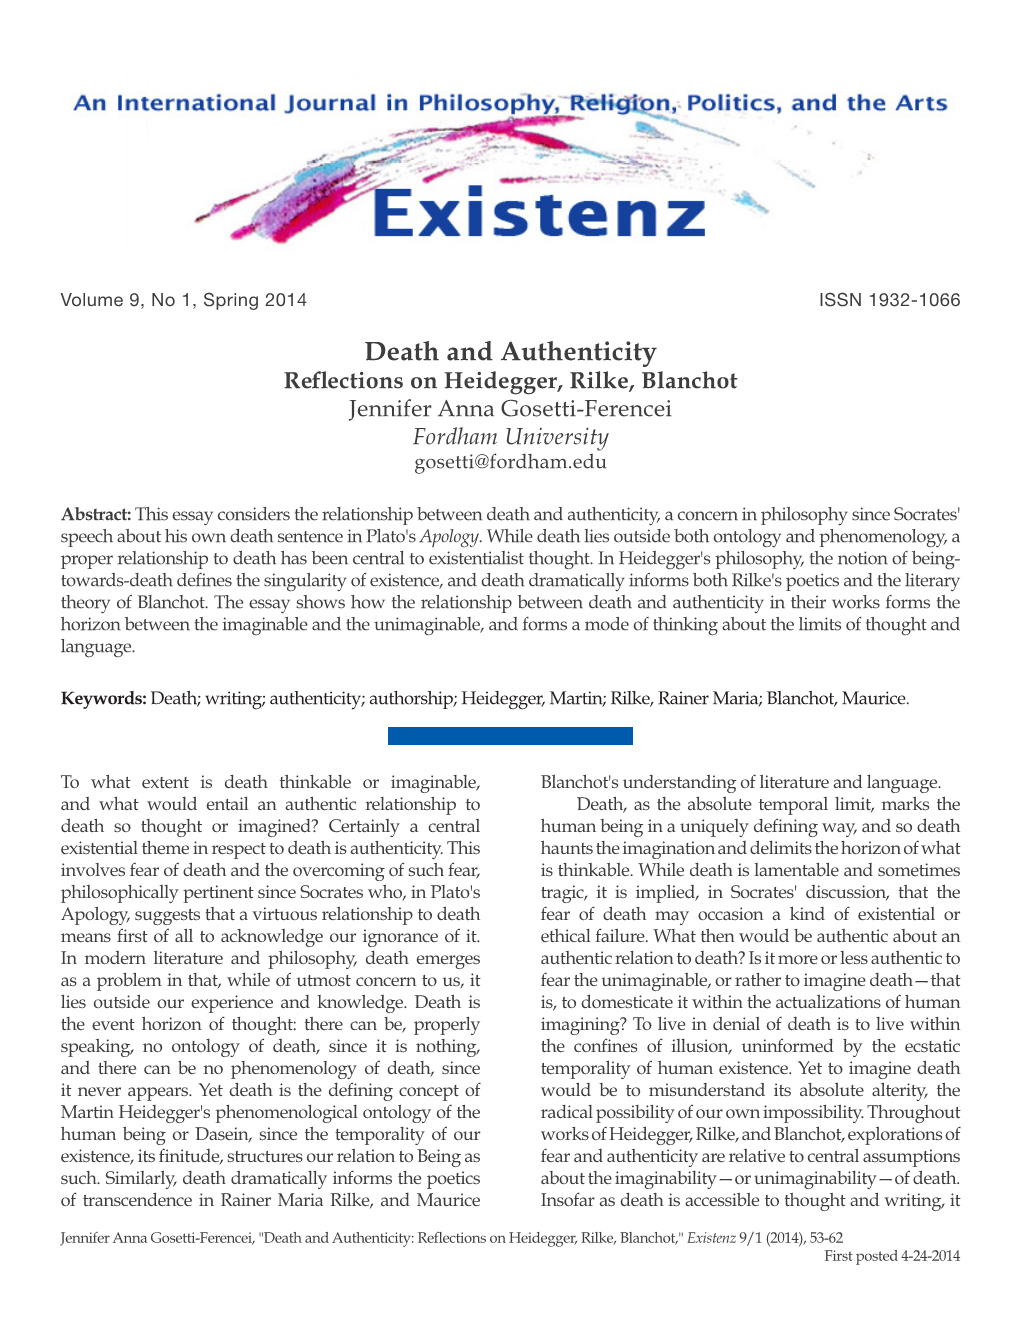 Death and Authenticity: Reflections on Heidegger, Rilke, Blanchot